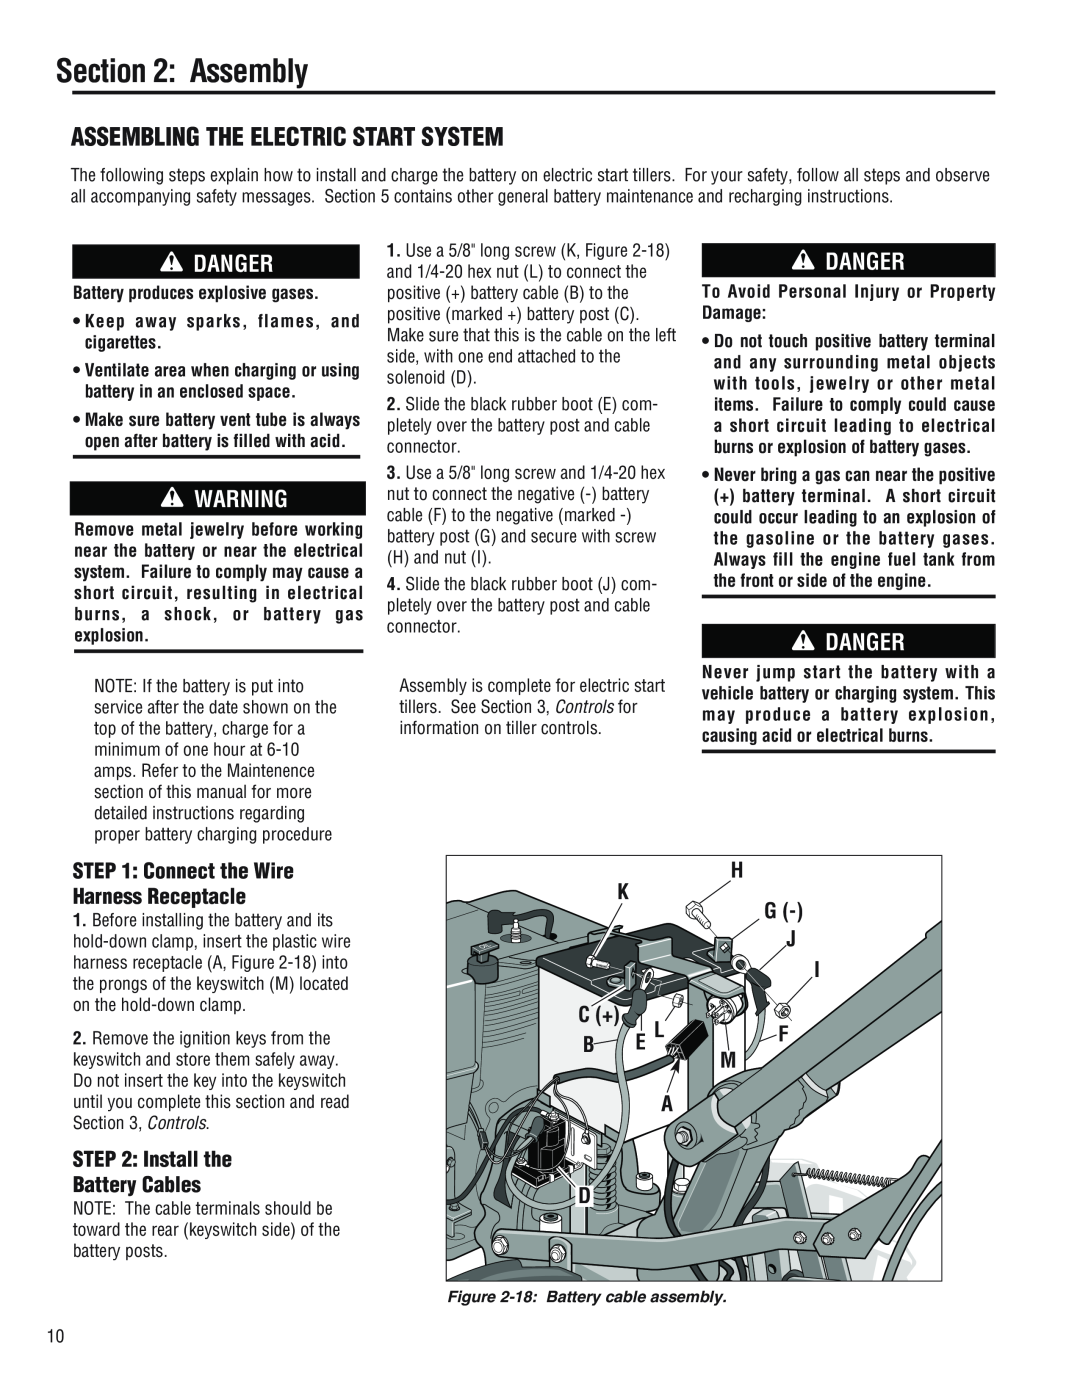 Troy-Bilt E686N manual Assembling The Electric Start System, Danger, Install the Battery Cables, H K G J I C + B E Lf M A D 